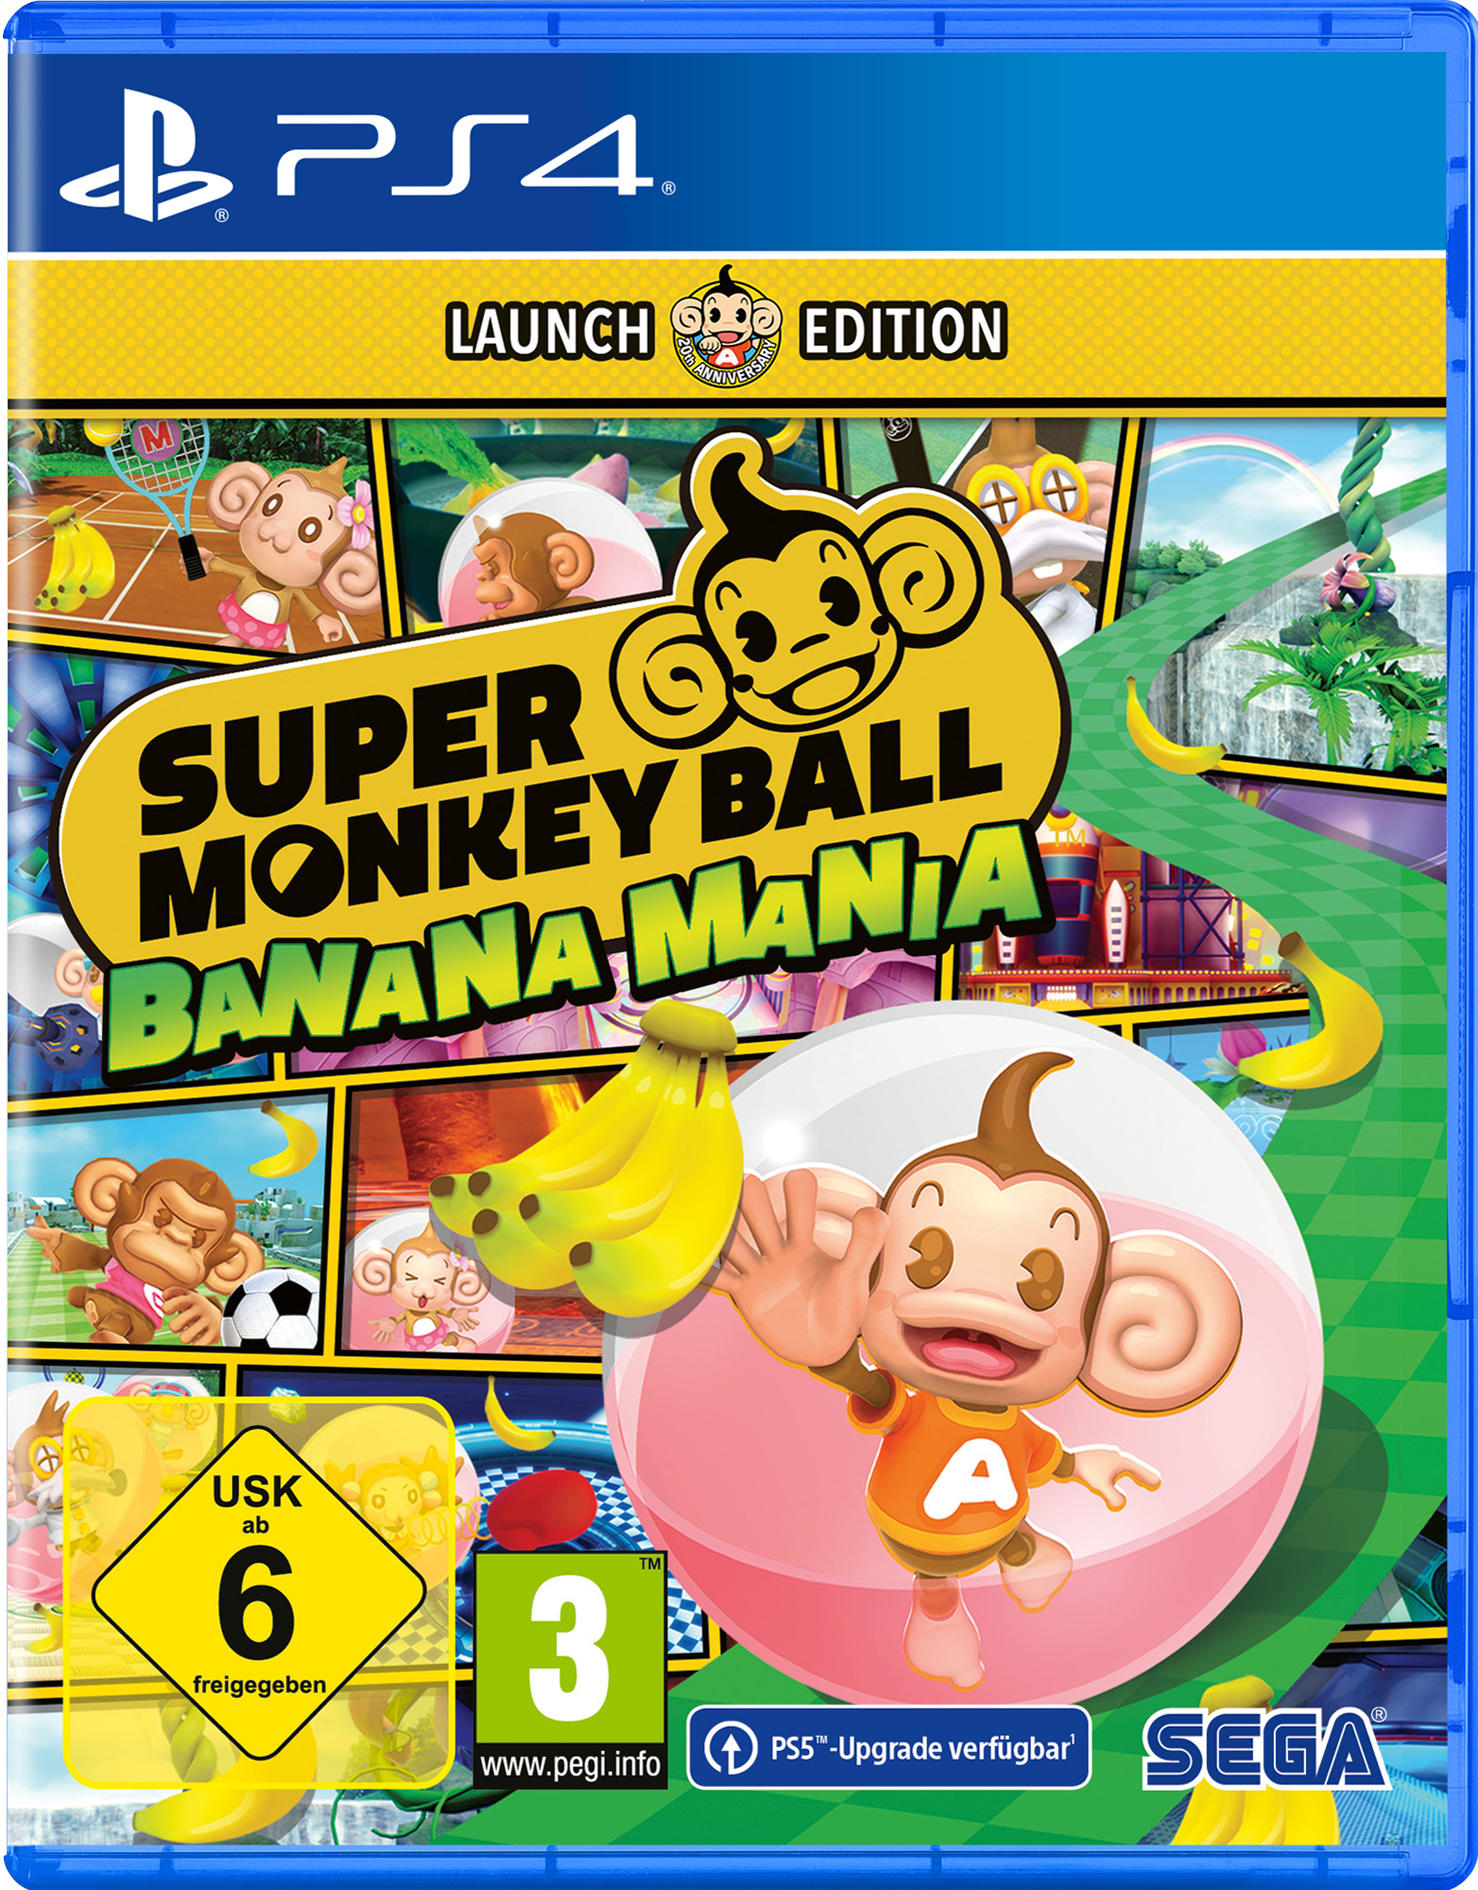 EDITION [PlayStation PS4 4] BALL SUPER BANANA - MONKEY MANIALAUNCH